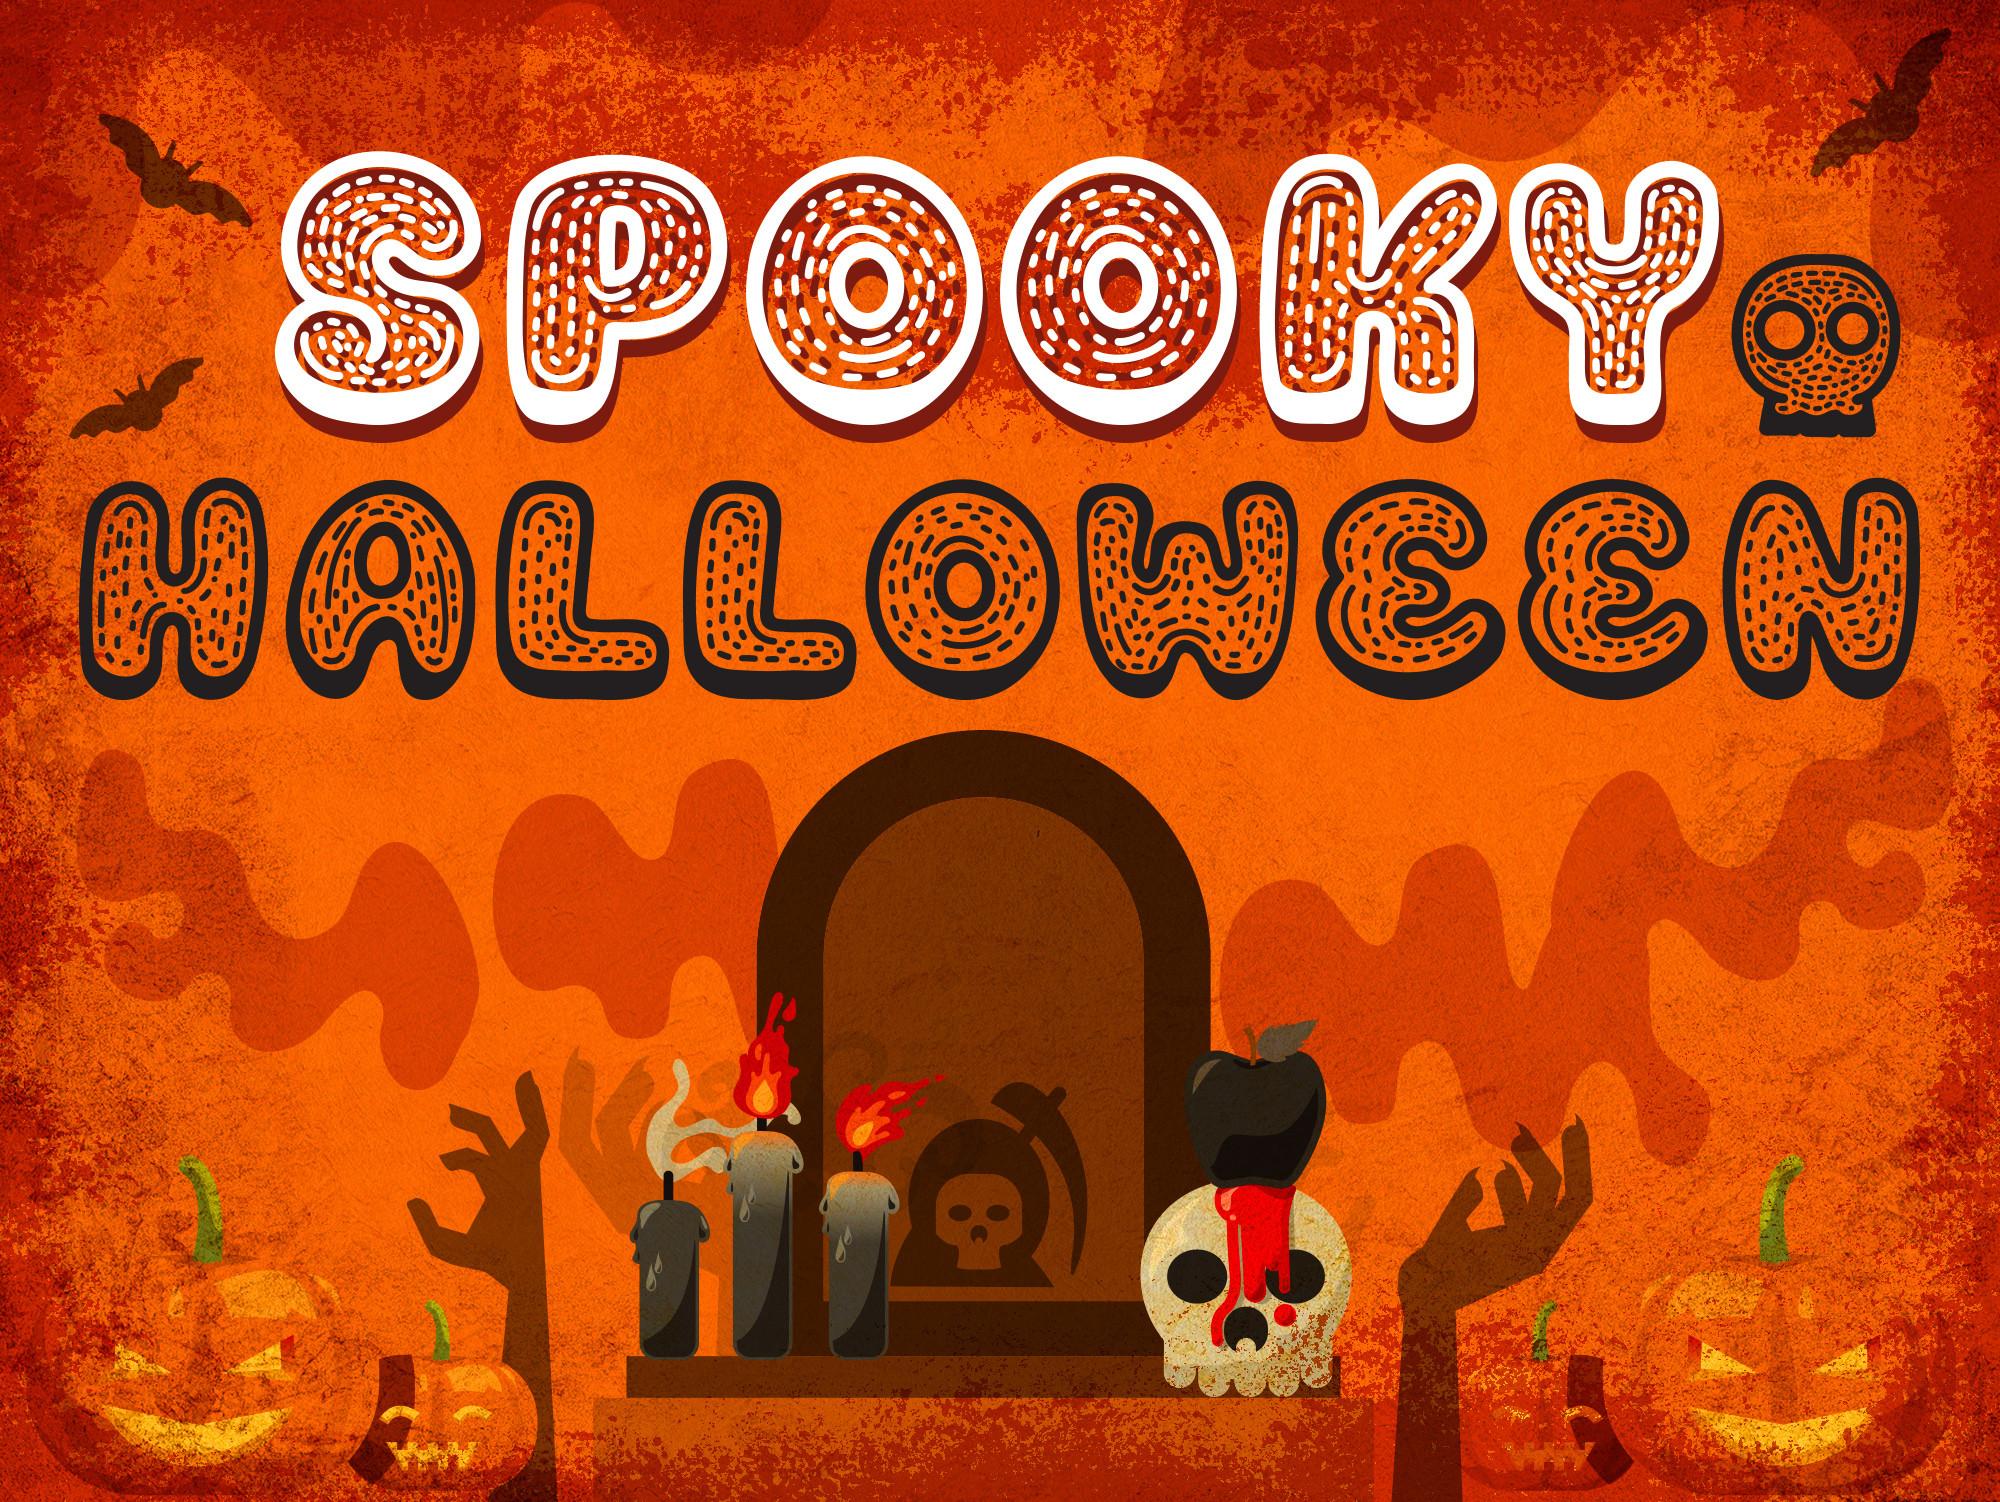 Spooky Halloween Font